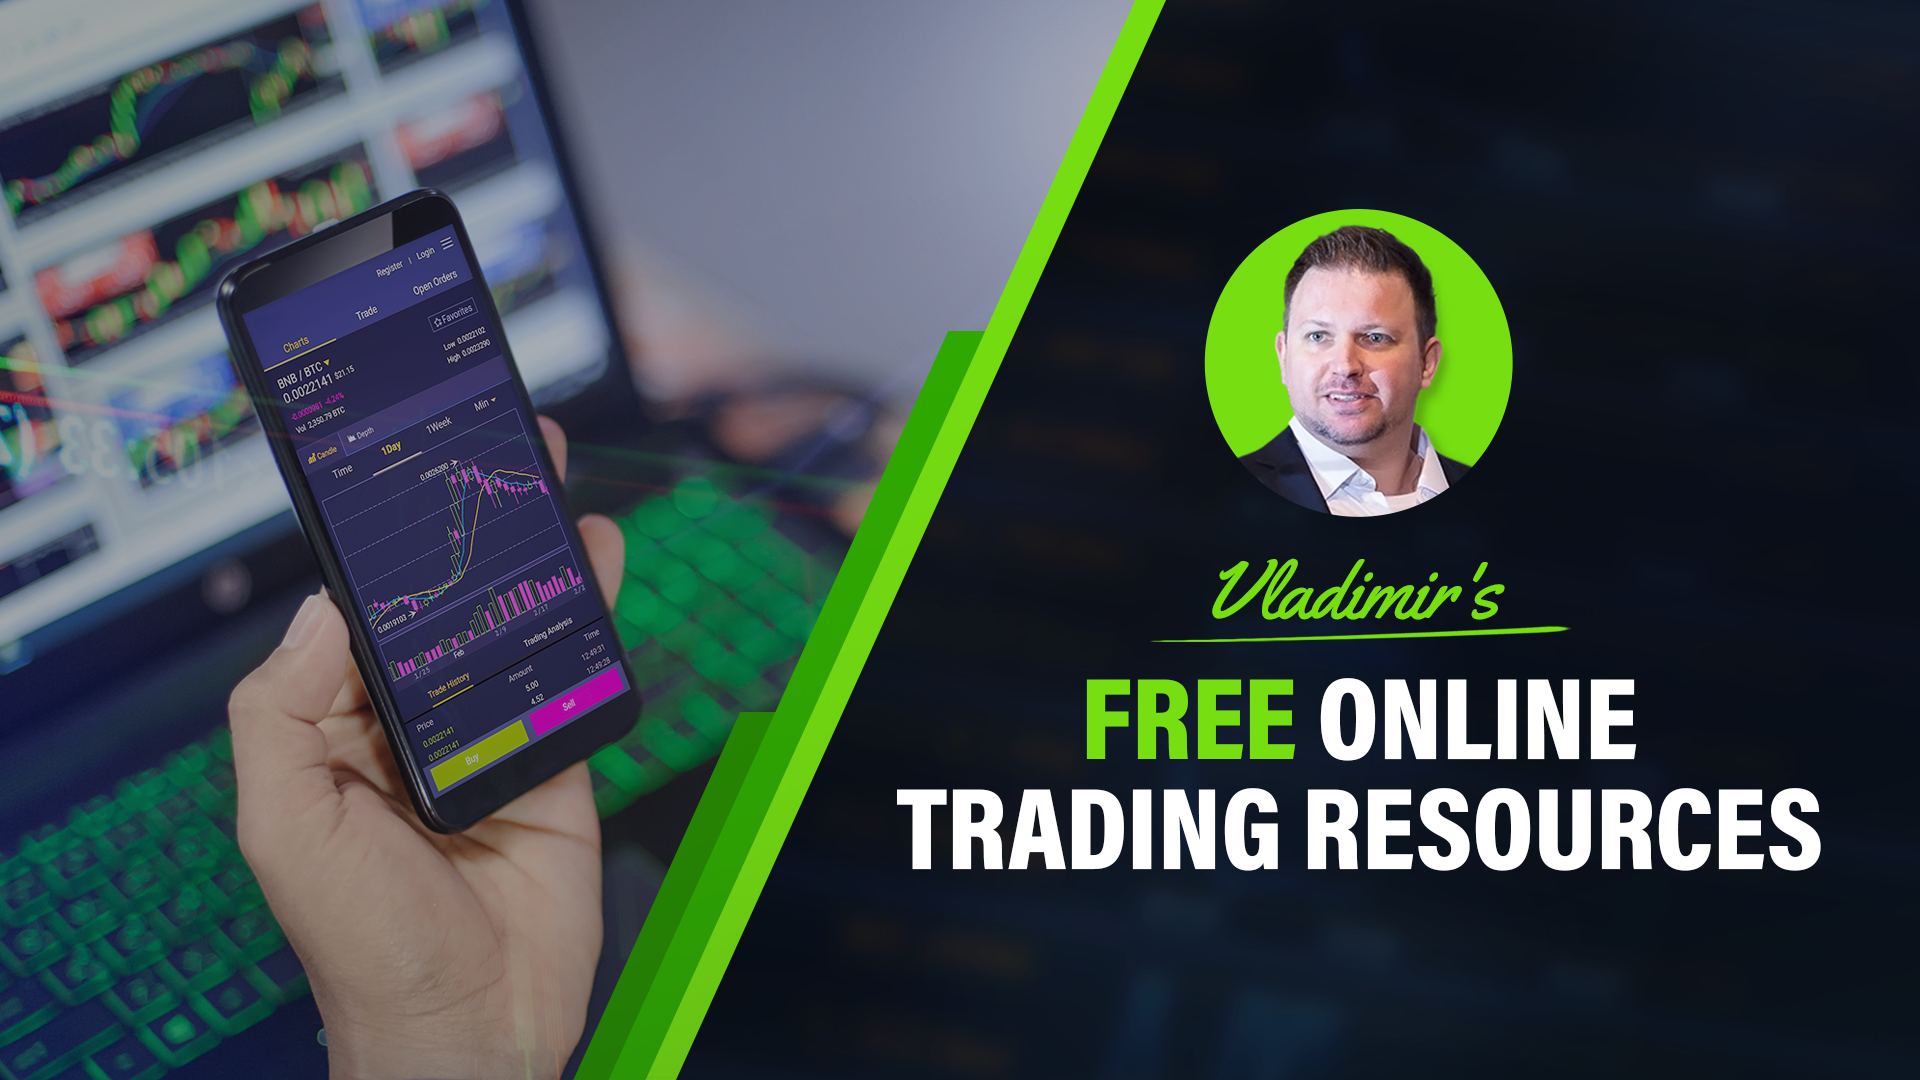 Vladimir's Trading Resources - Vladimir Ribakov